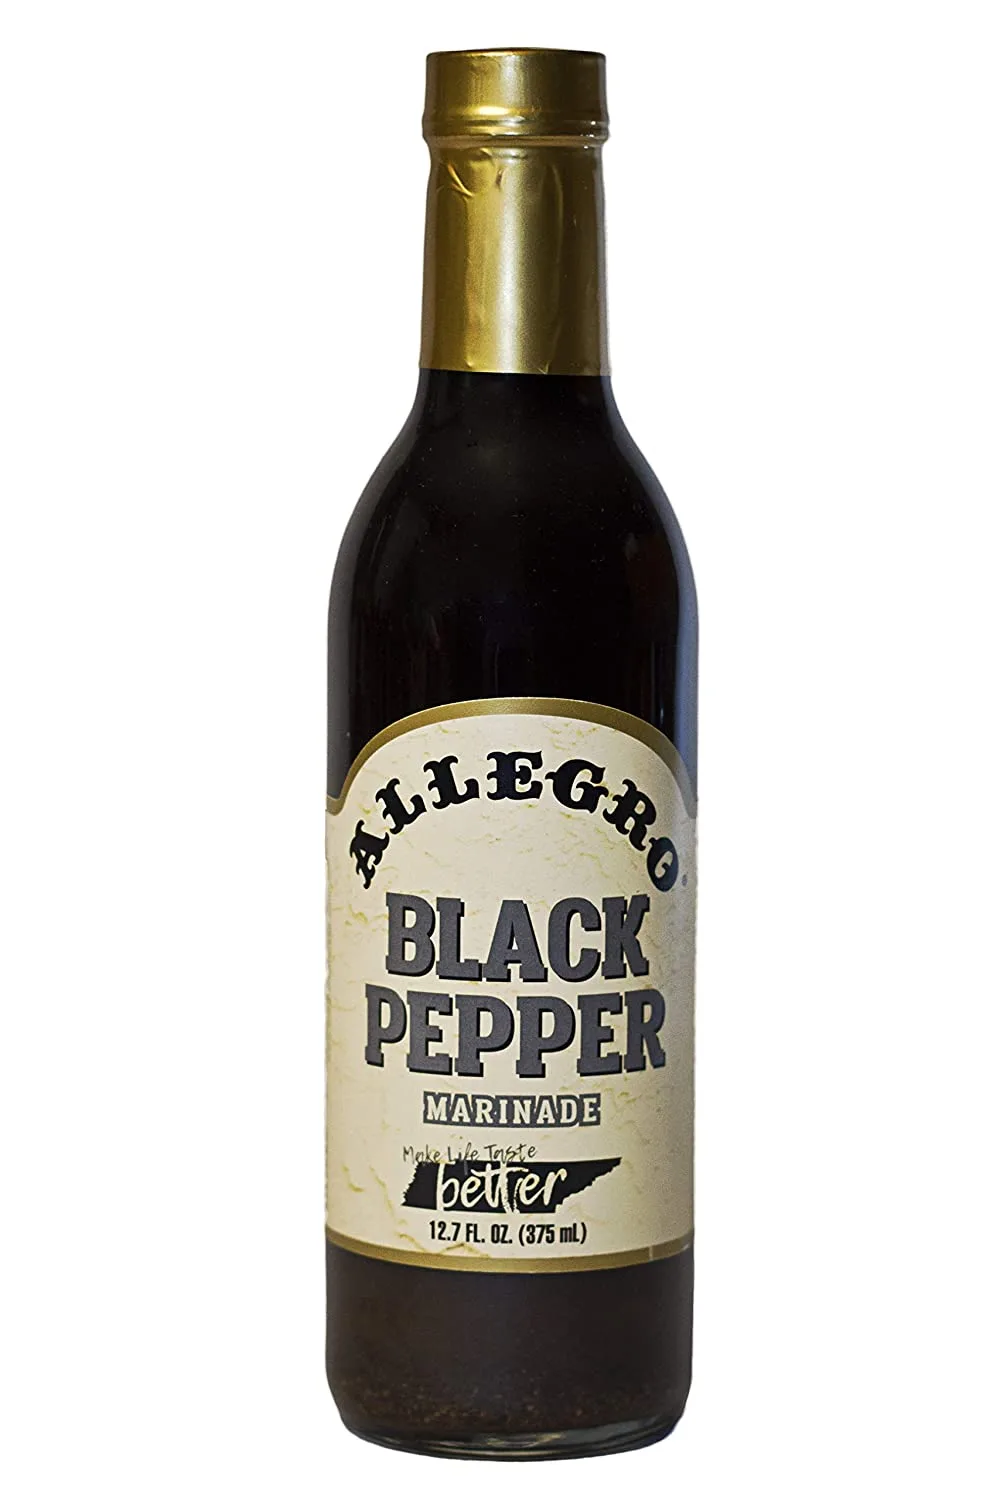 Black Pepper marinade